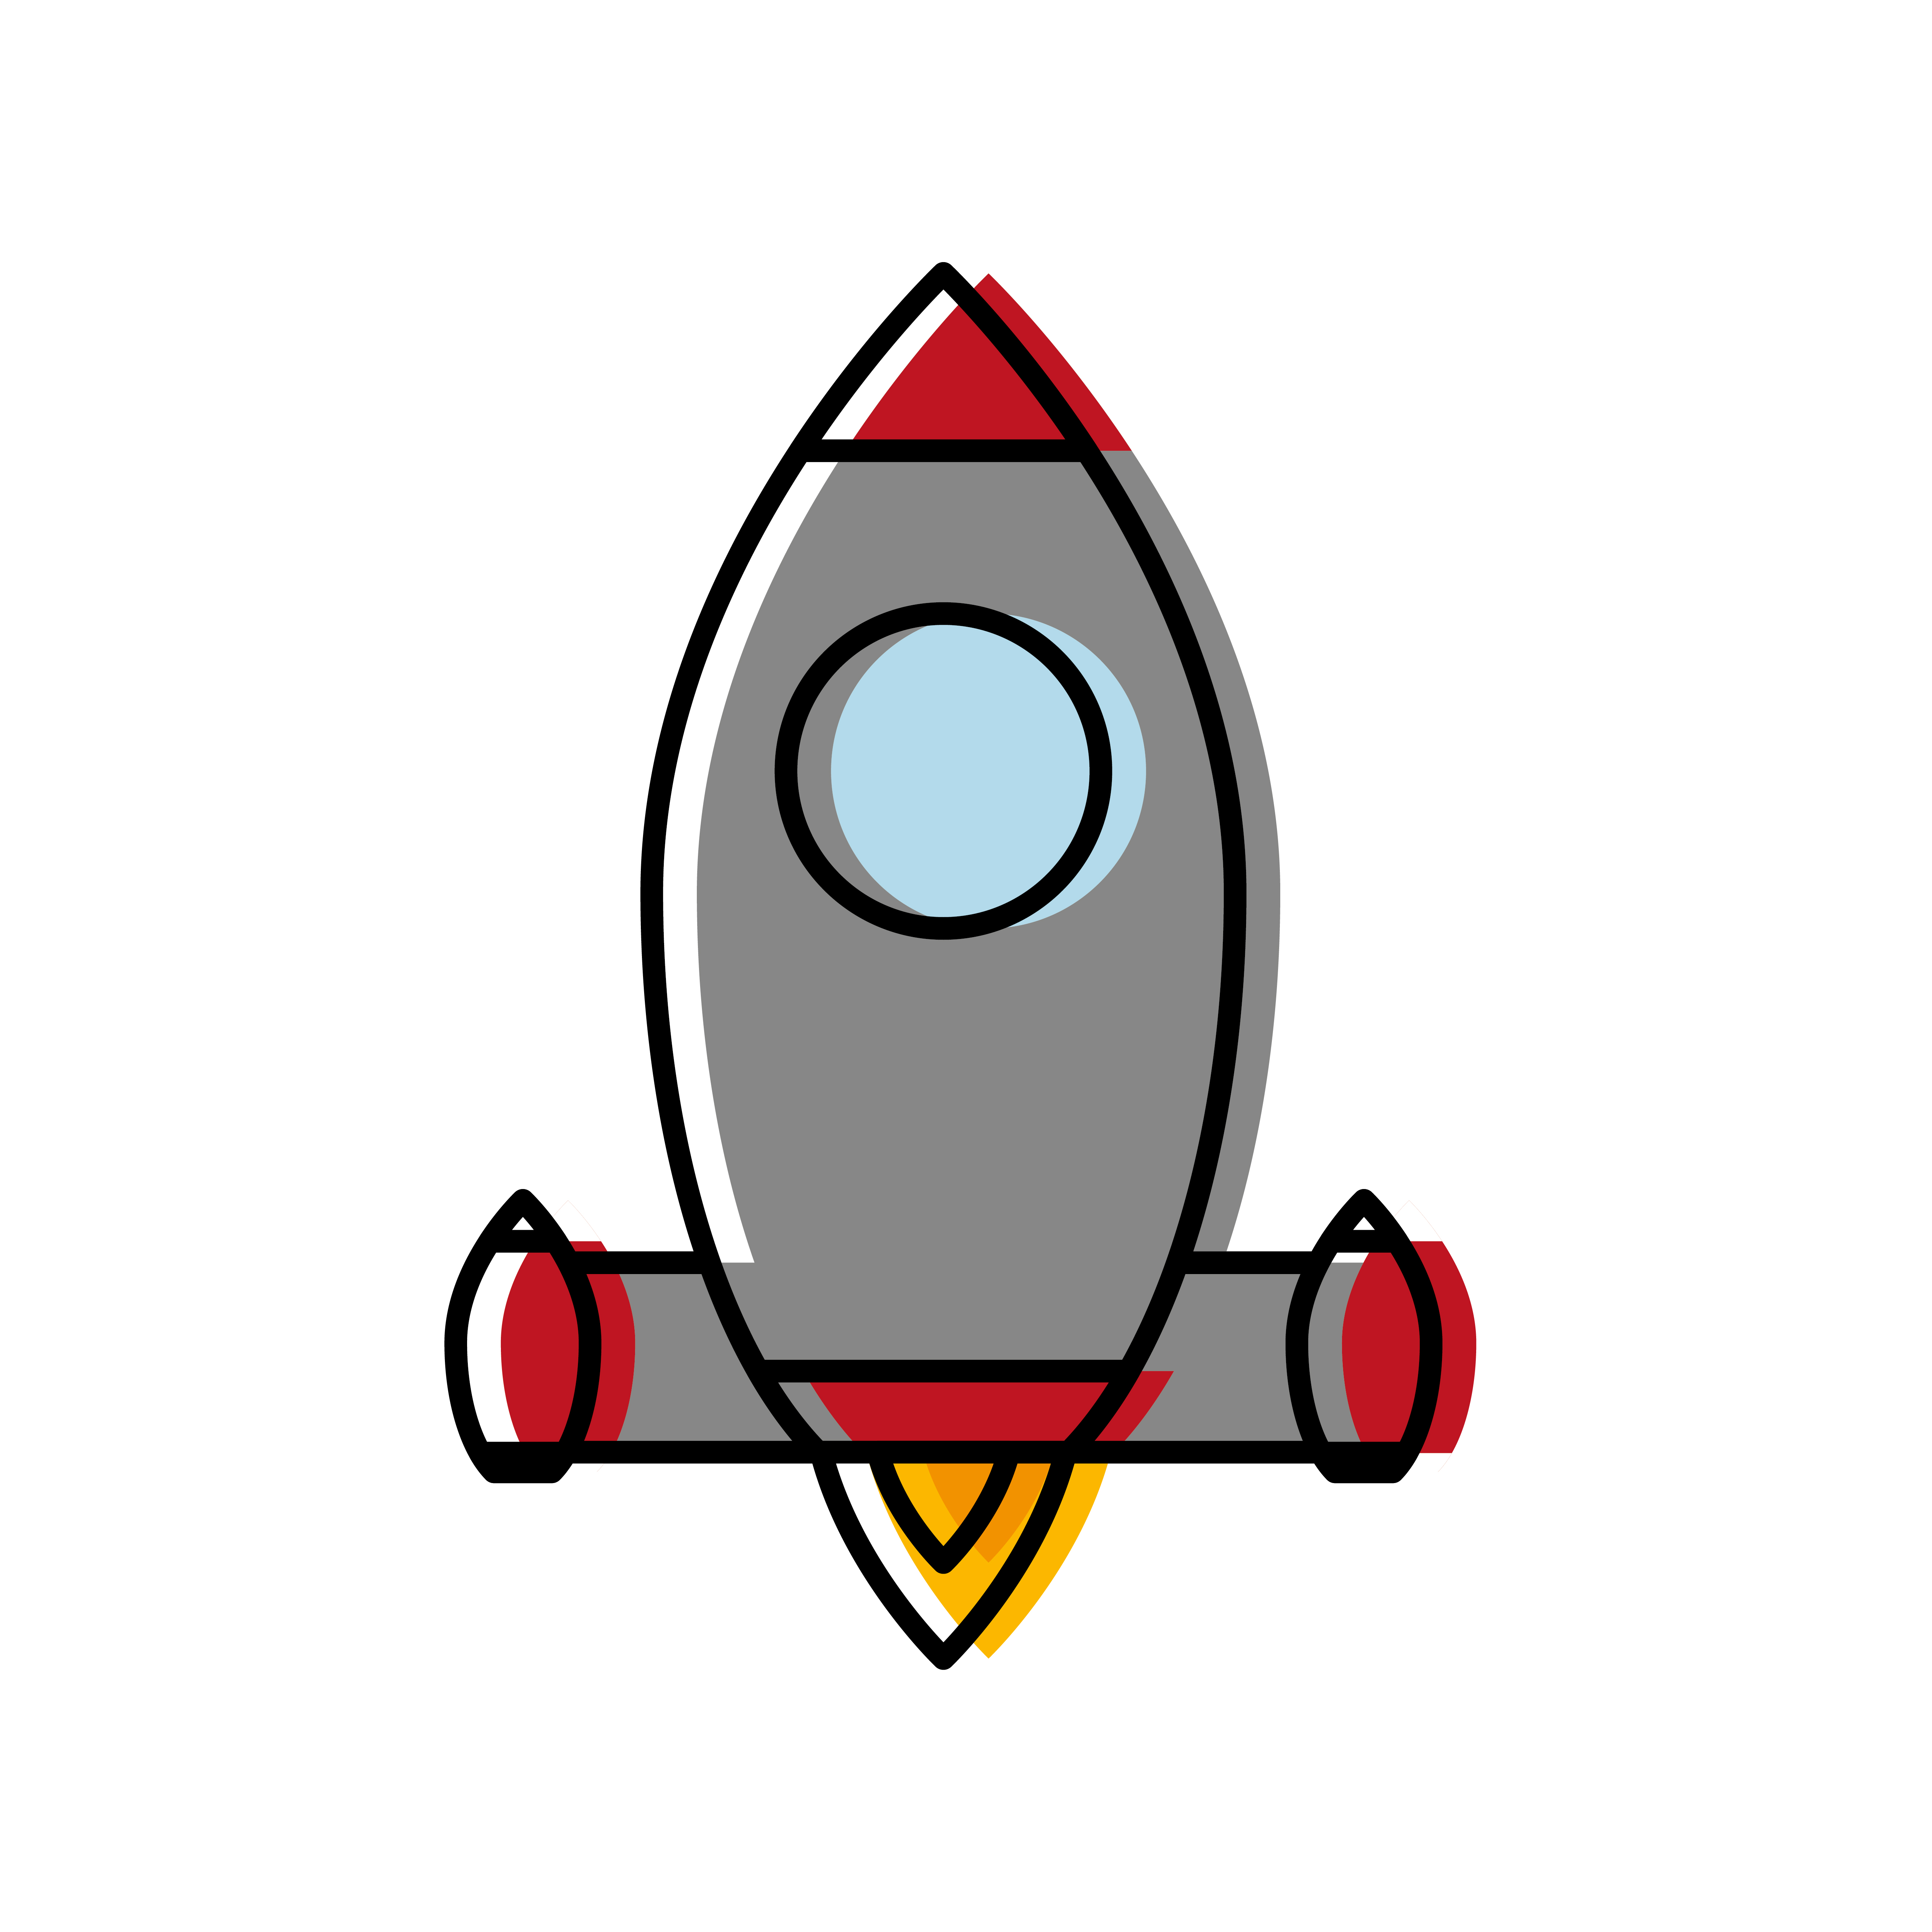 space rocket icon 659688 Download Free Vectors, Clipart